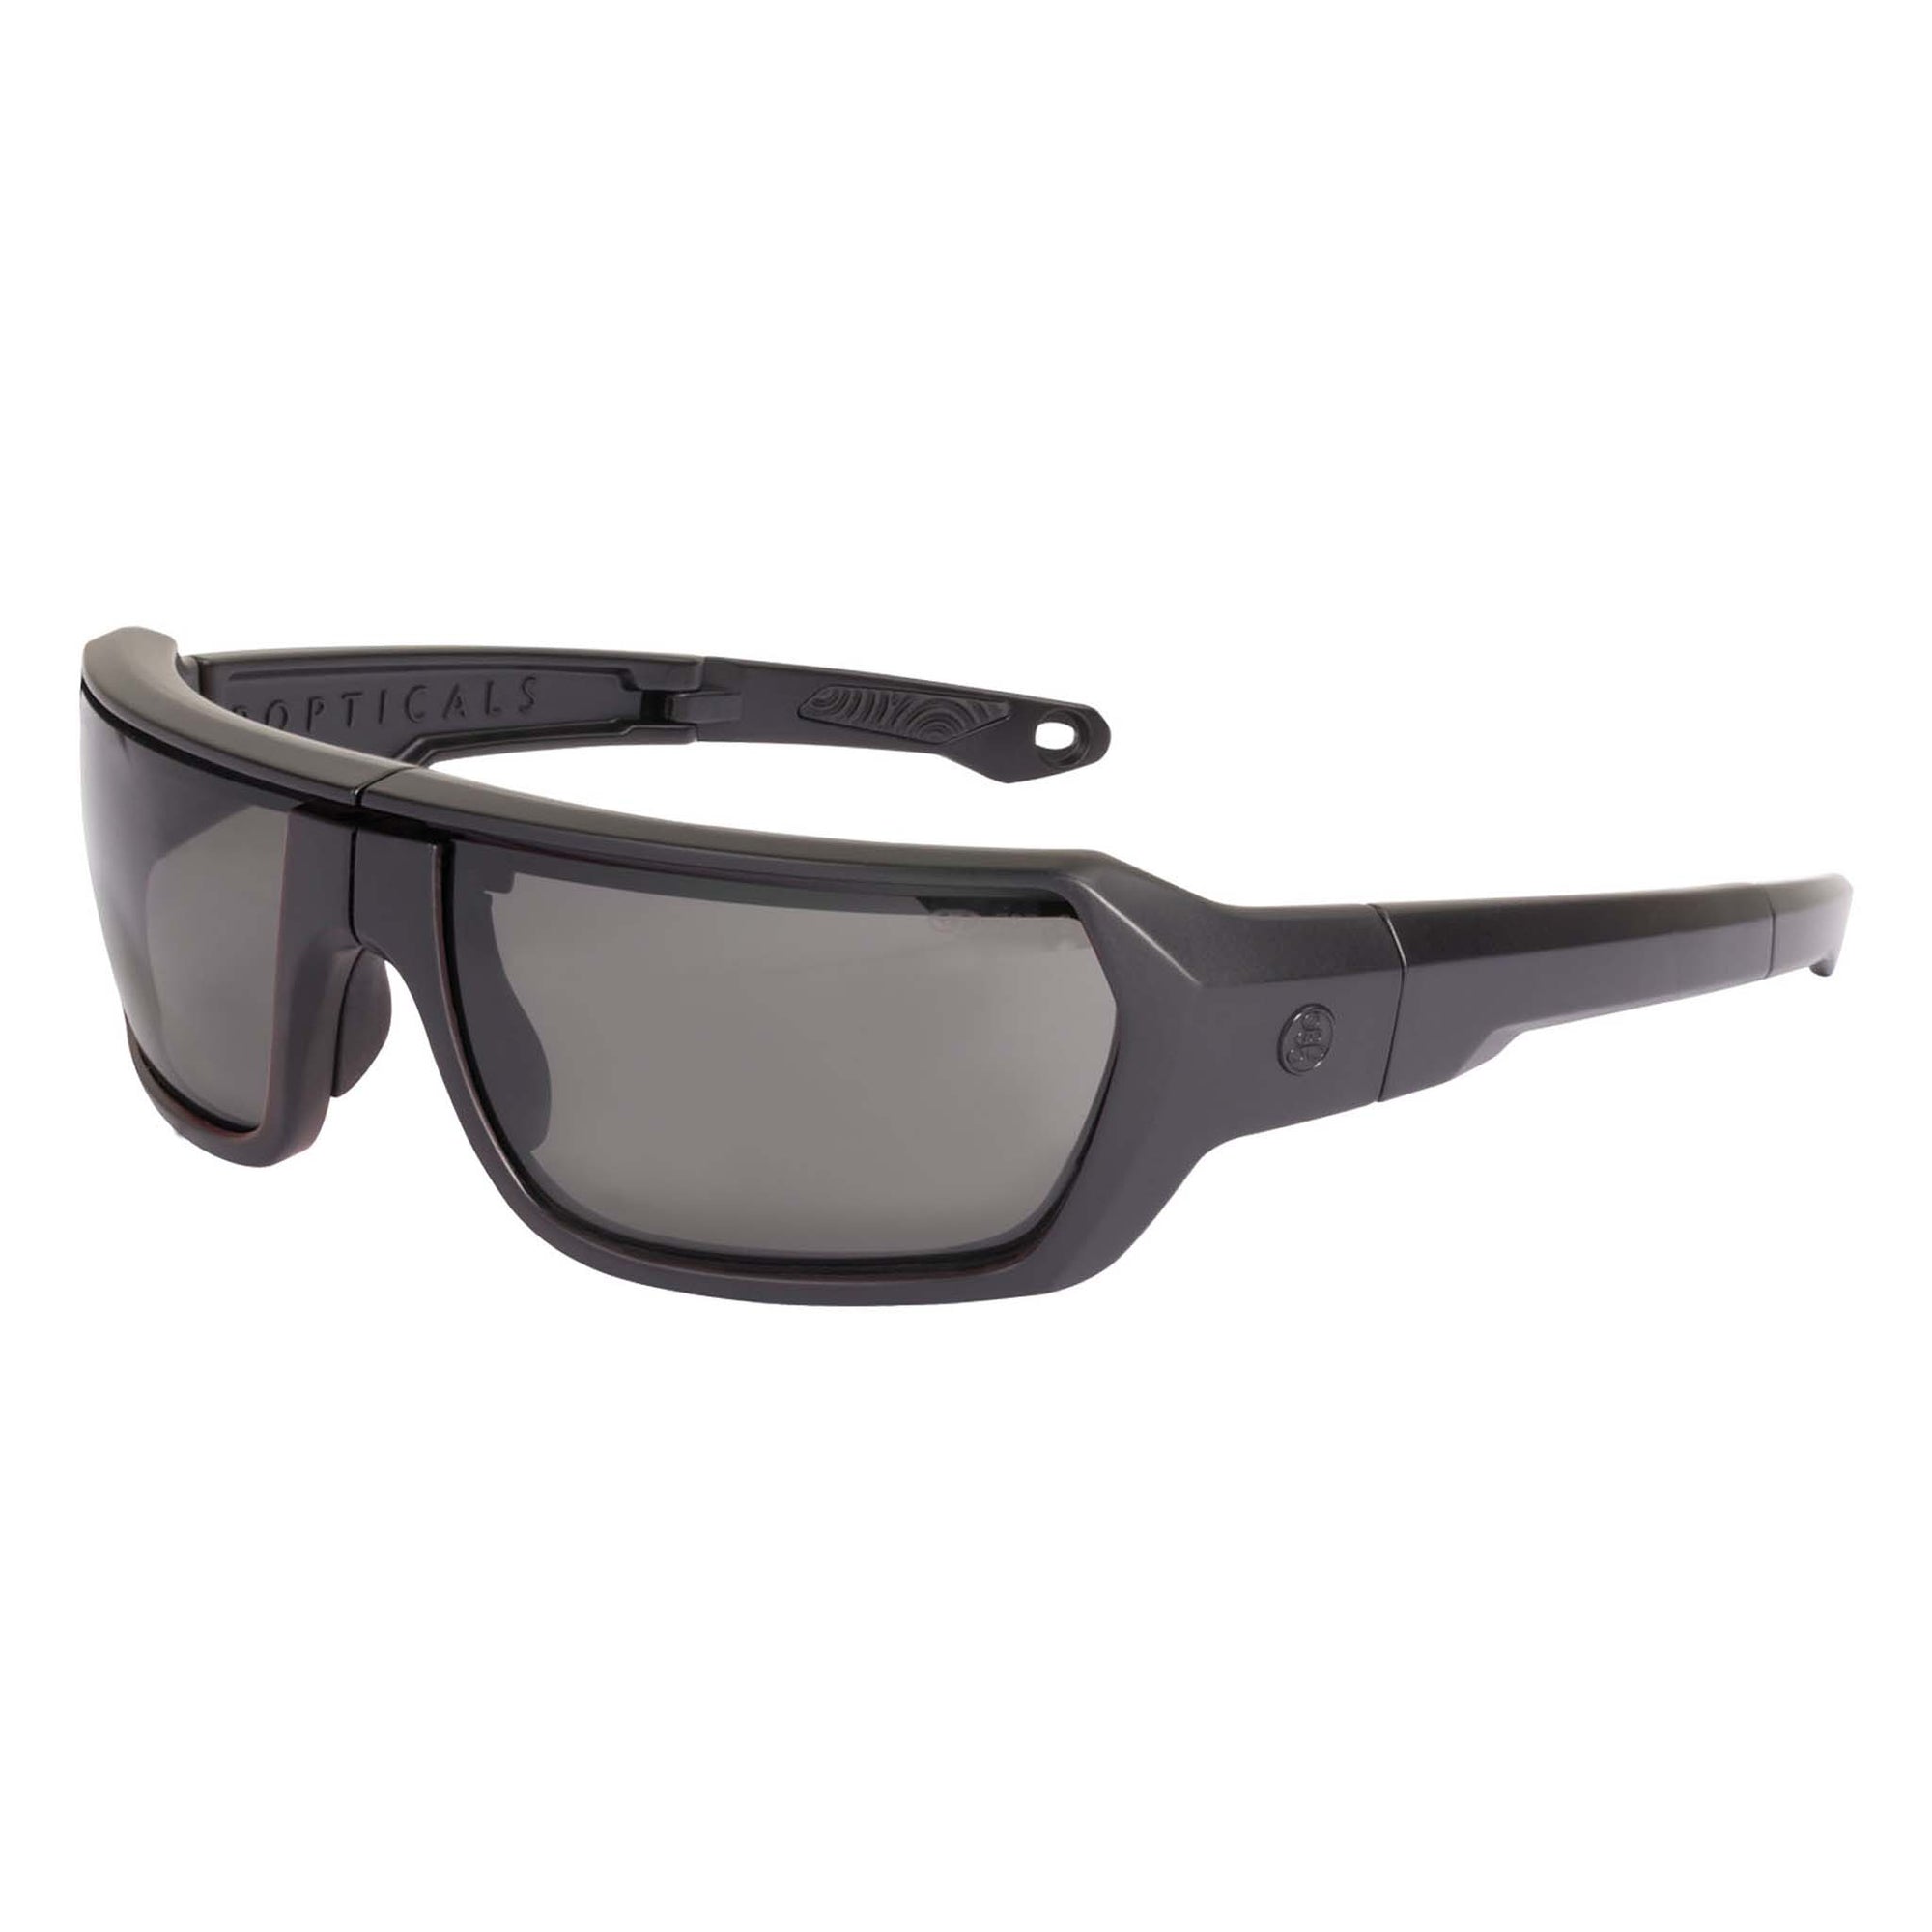 Popticals, Premium Compact Sunglasses, PopZulu, 600010-BMGZ, Standard Sunglasses, Matte Black Frame, Gray Opx Lenses, Glam View